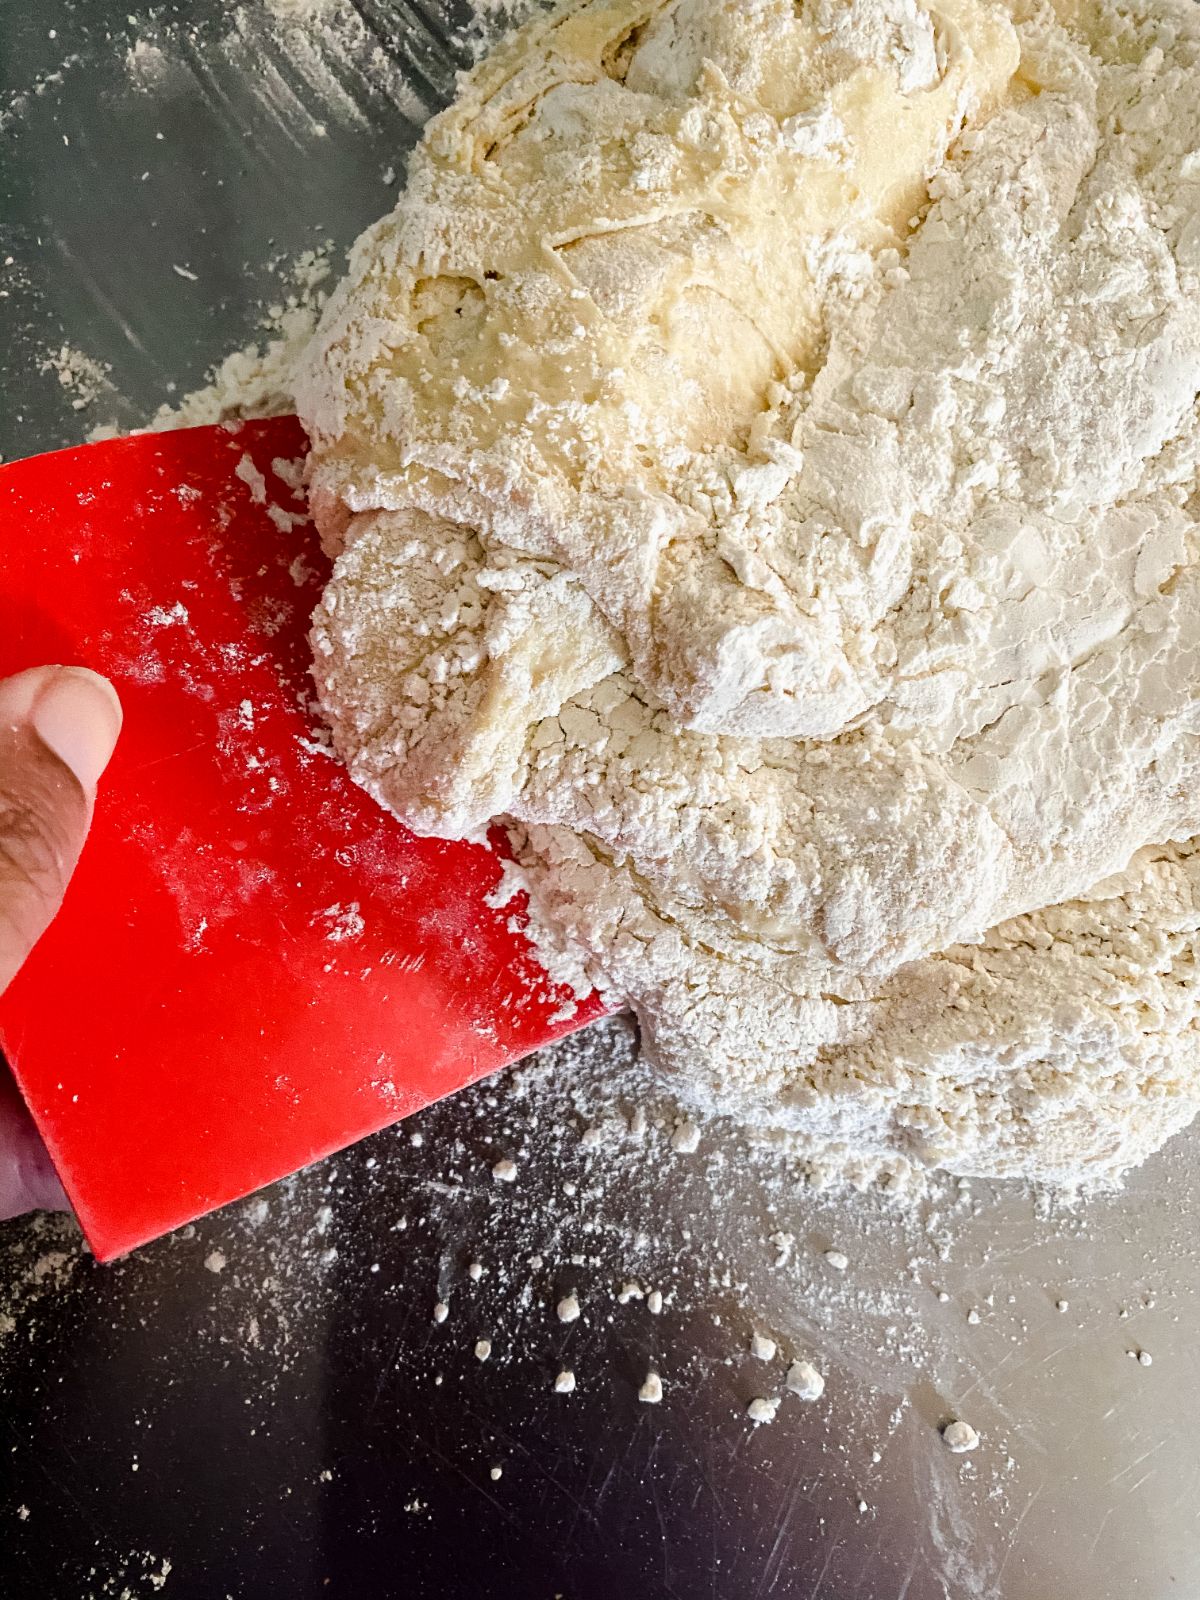 red table scraper lifting dough